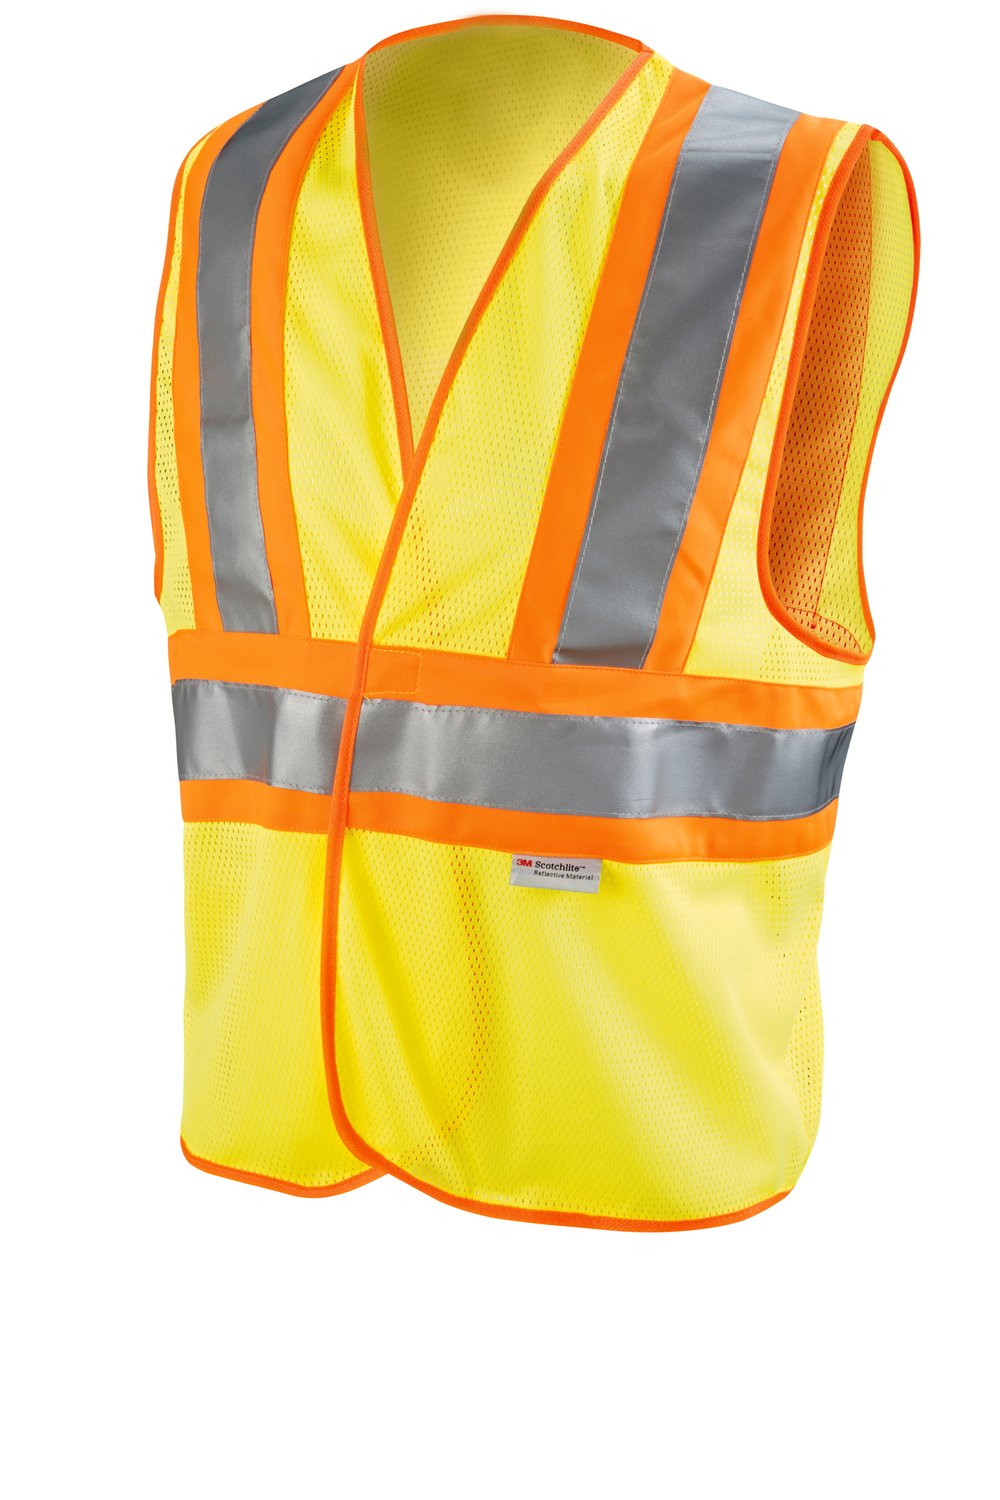 7100178484 - 3M Reflective Construction Safety Vest, Class 2 Two-Tone,
94620-80030-PS Hi-Viz Yellow, 5/case